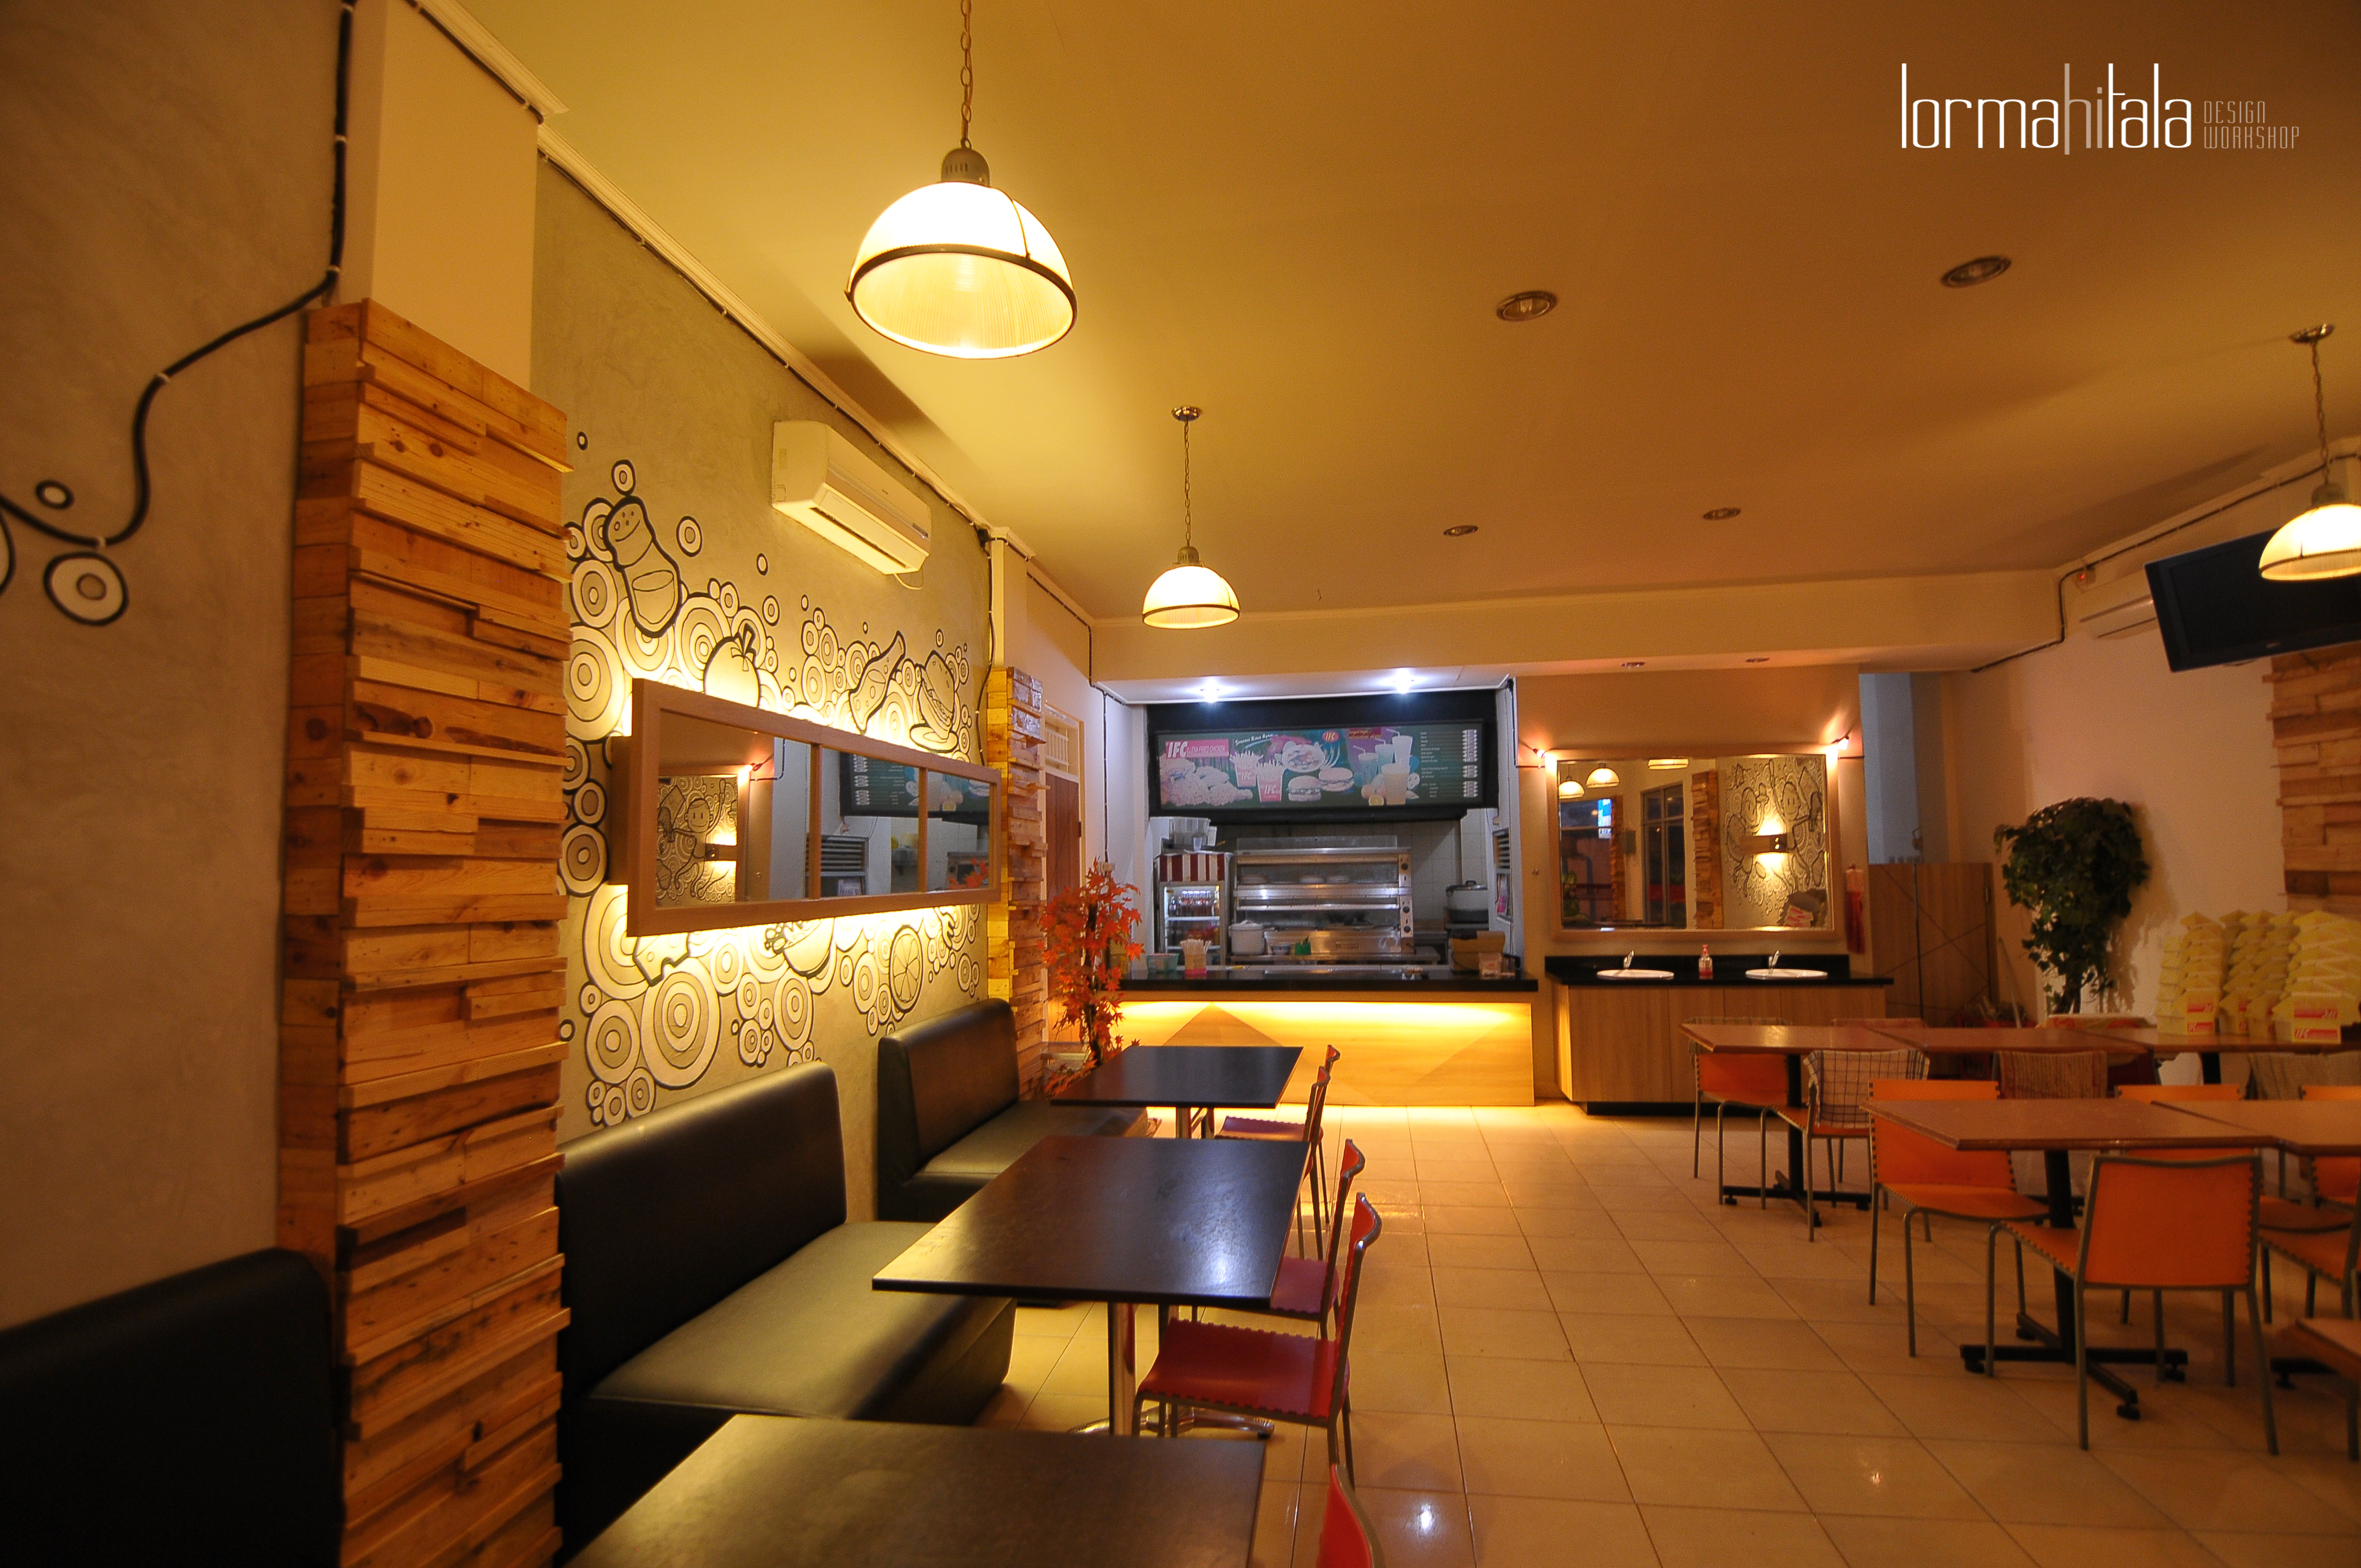 Resto Cafe With Natural Rustic Interior Style LORMAHITALA DESAIN